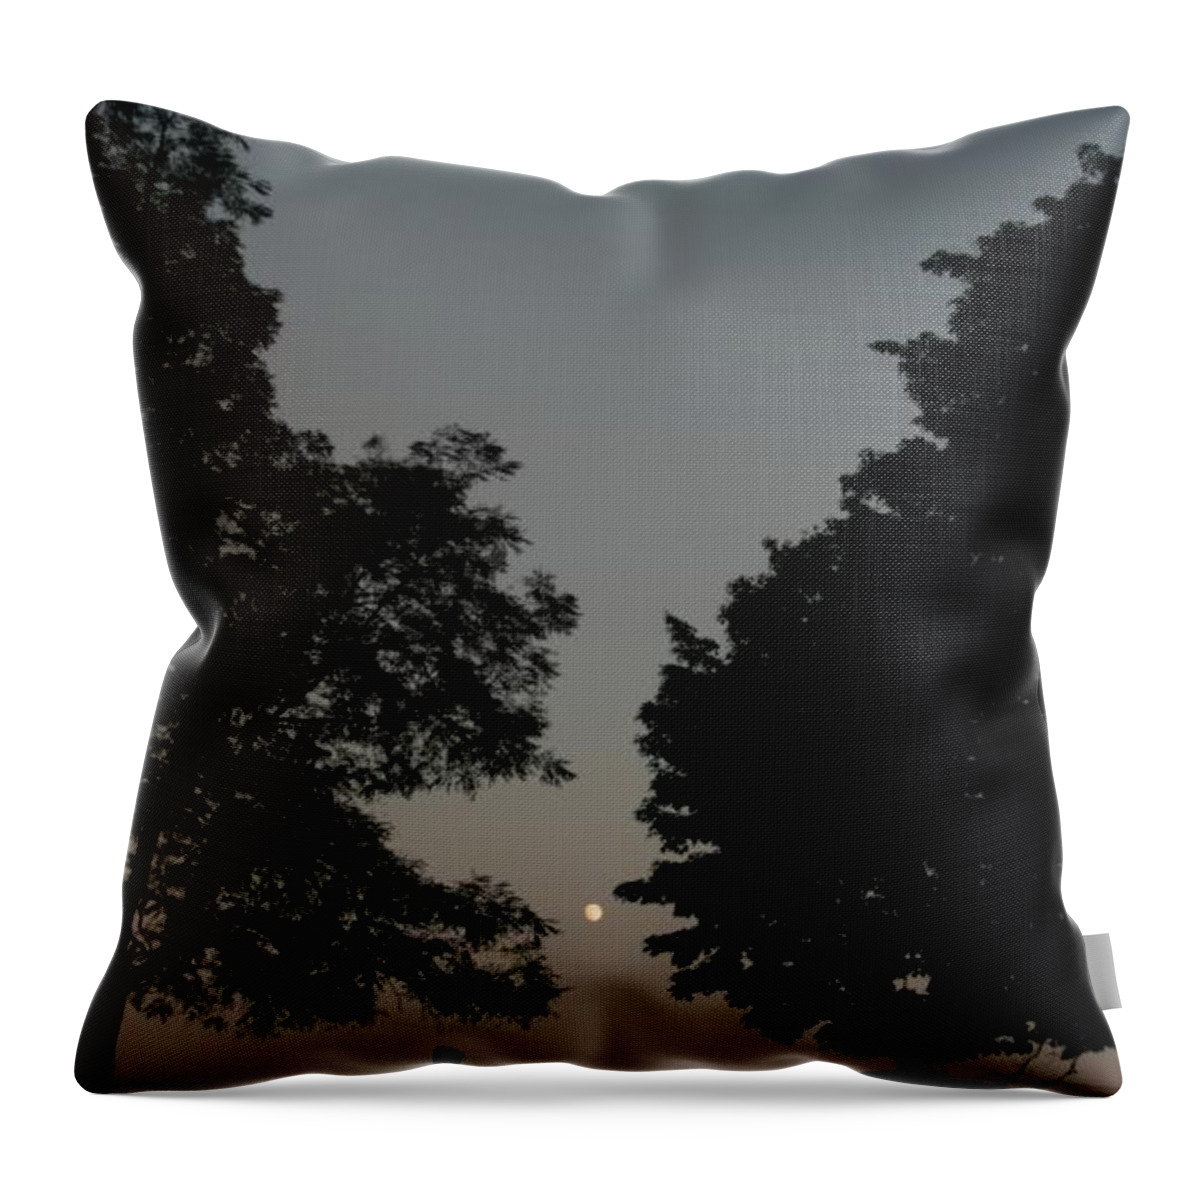 North Carolina Throw Pillow featuring the photograph Doughton Park on the Blue Ridge Parkway by John Harmon